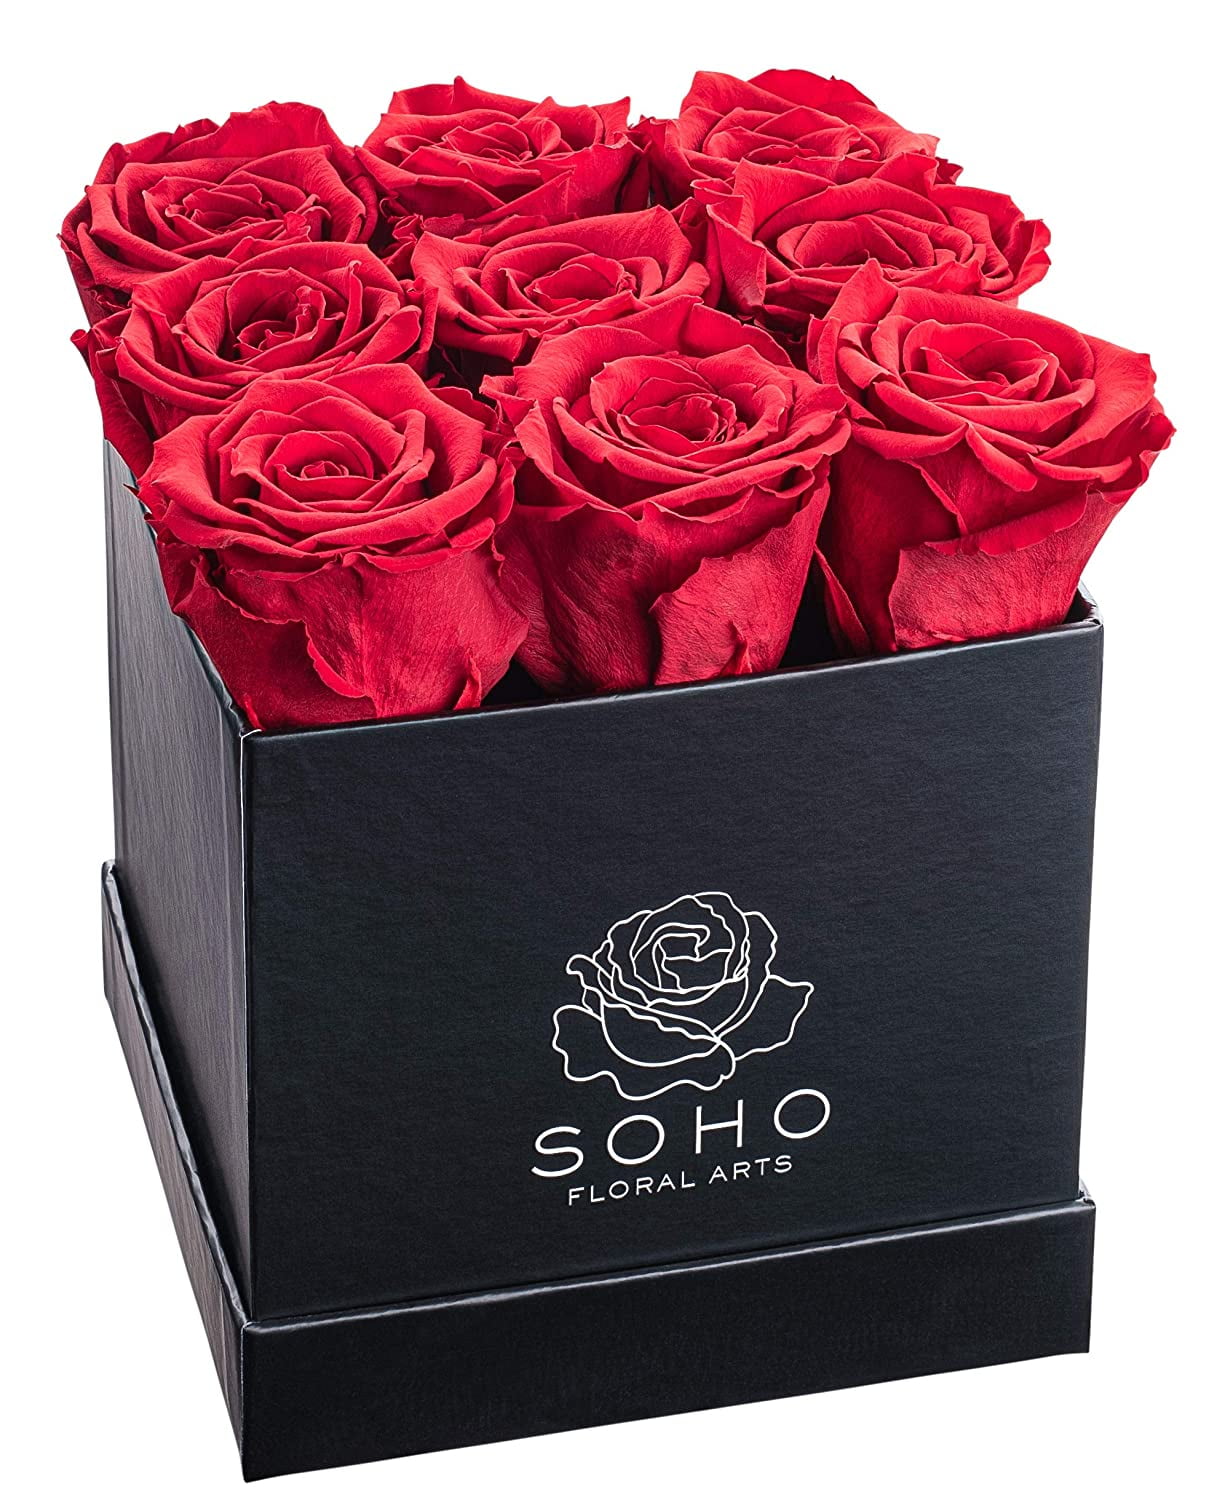 Preserved Rose Rose Box Everlasting Rose Forever Roses Gifts For Her Eternity Rose Flower Box Mirror One Year Roses Box of Roses